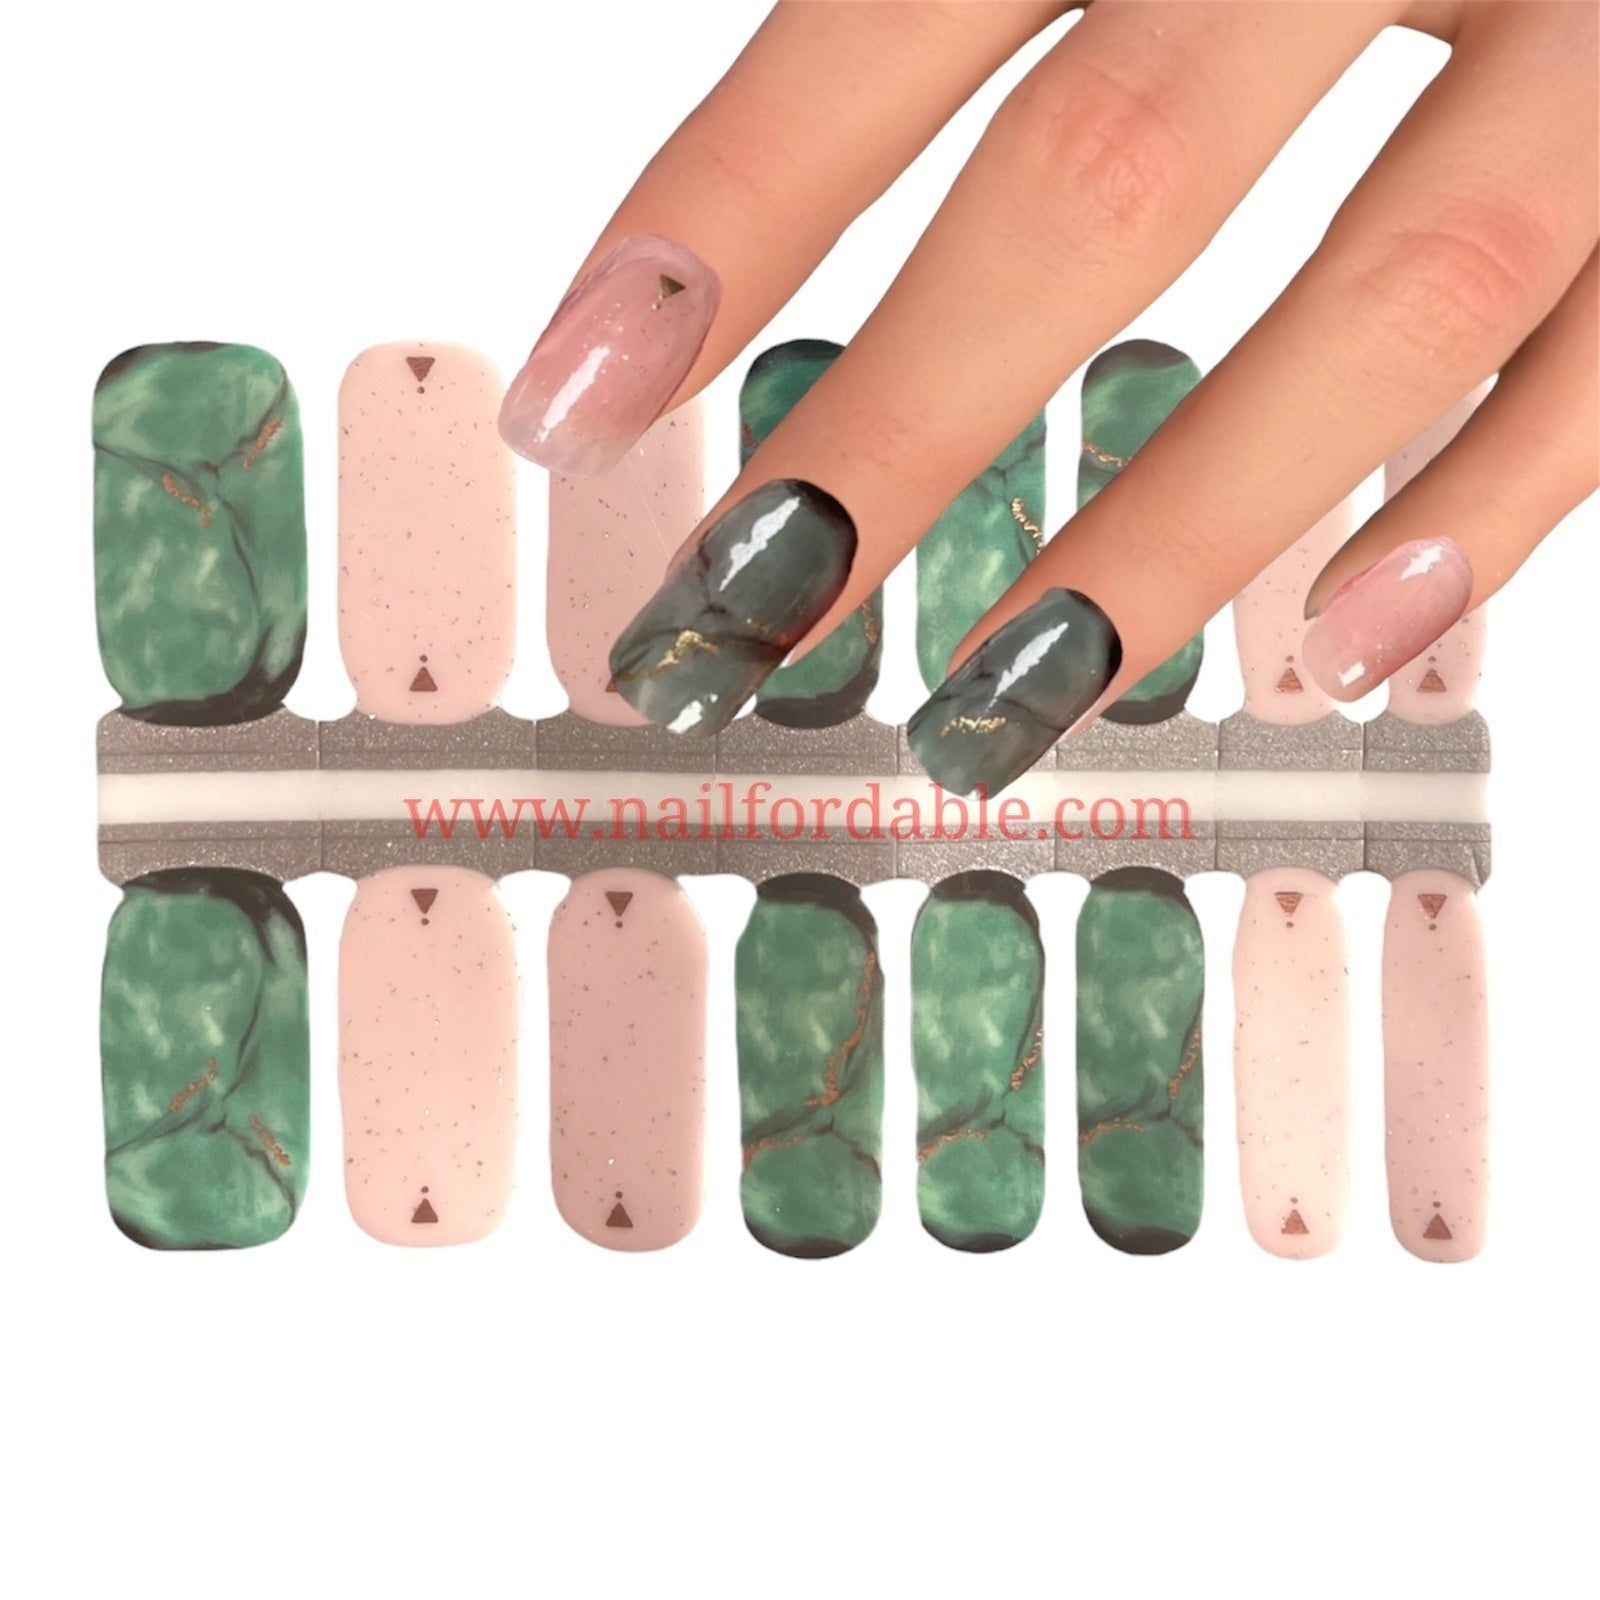 Green Marble Nail Wraps | Semi Cured Gel Wraps | Gel Nail Wraps |Nail Polish | Nail Stickers